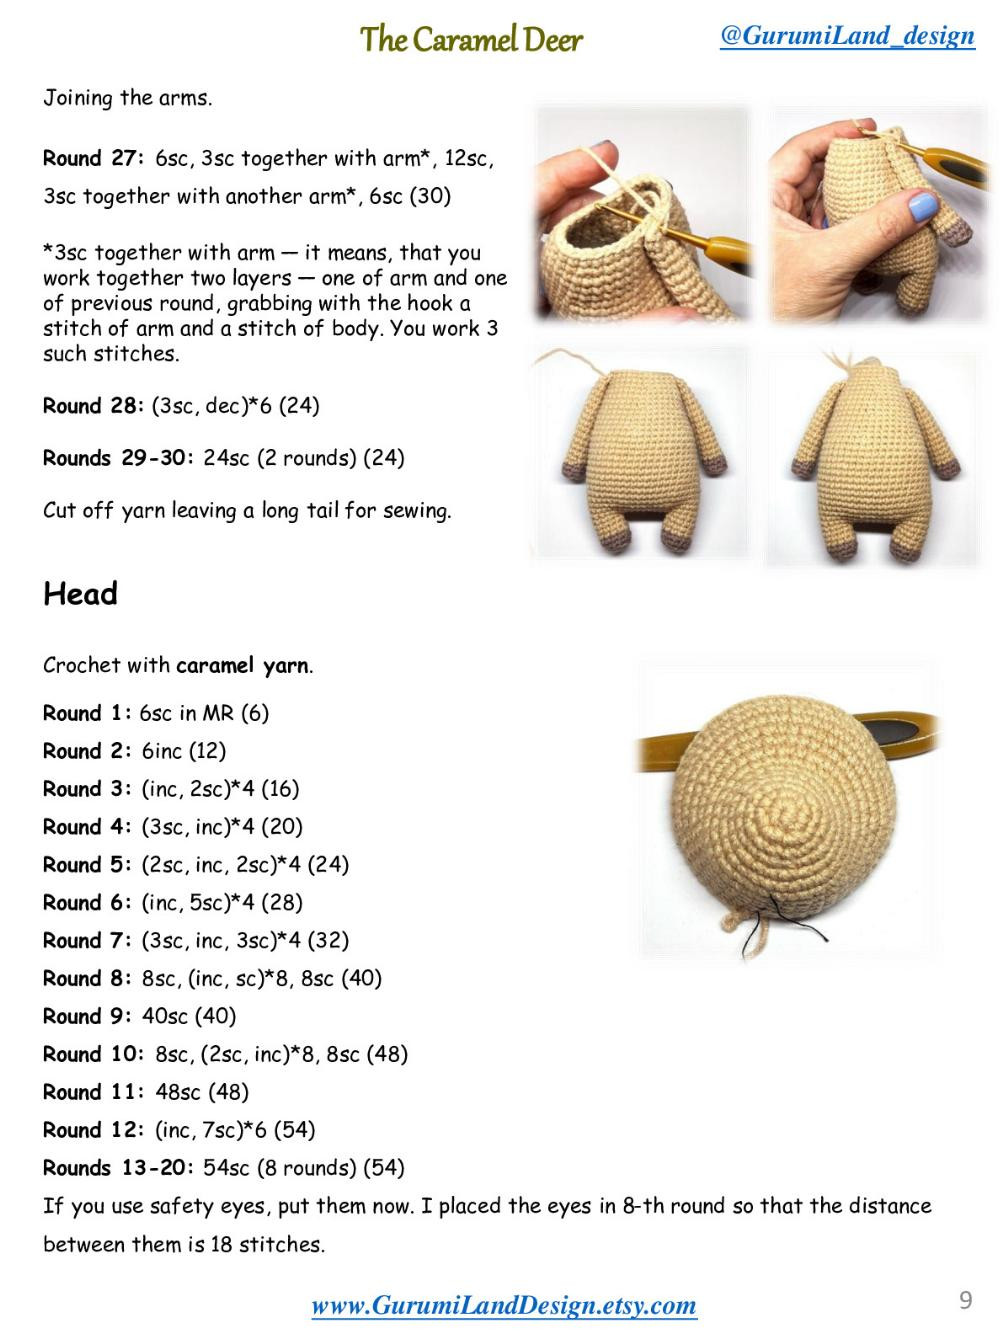 The Caramel Deer Crochet pattern